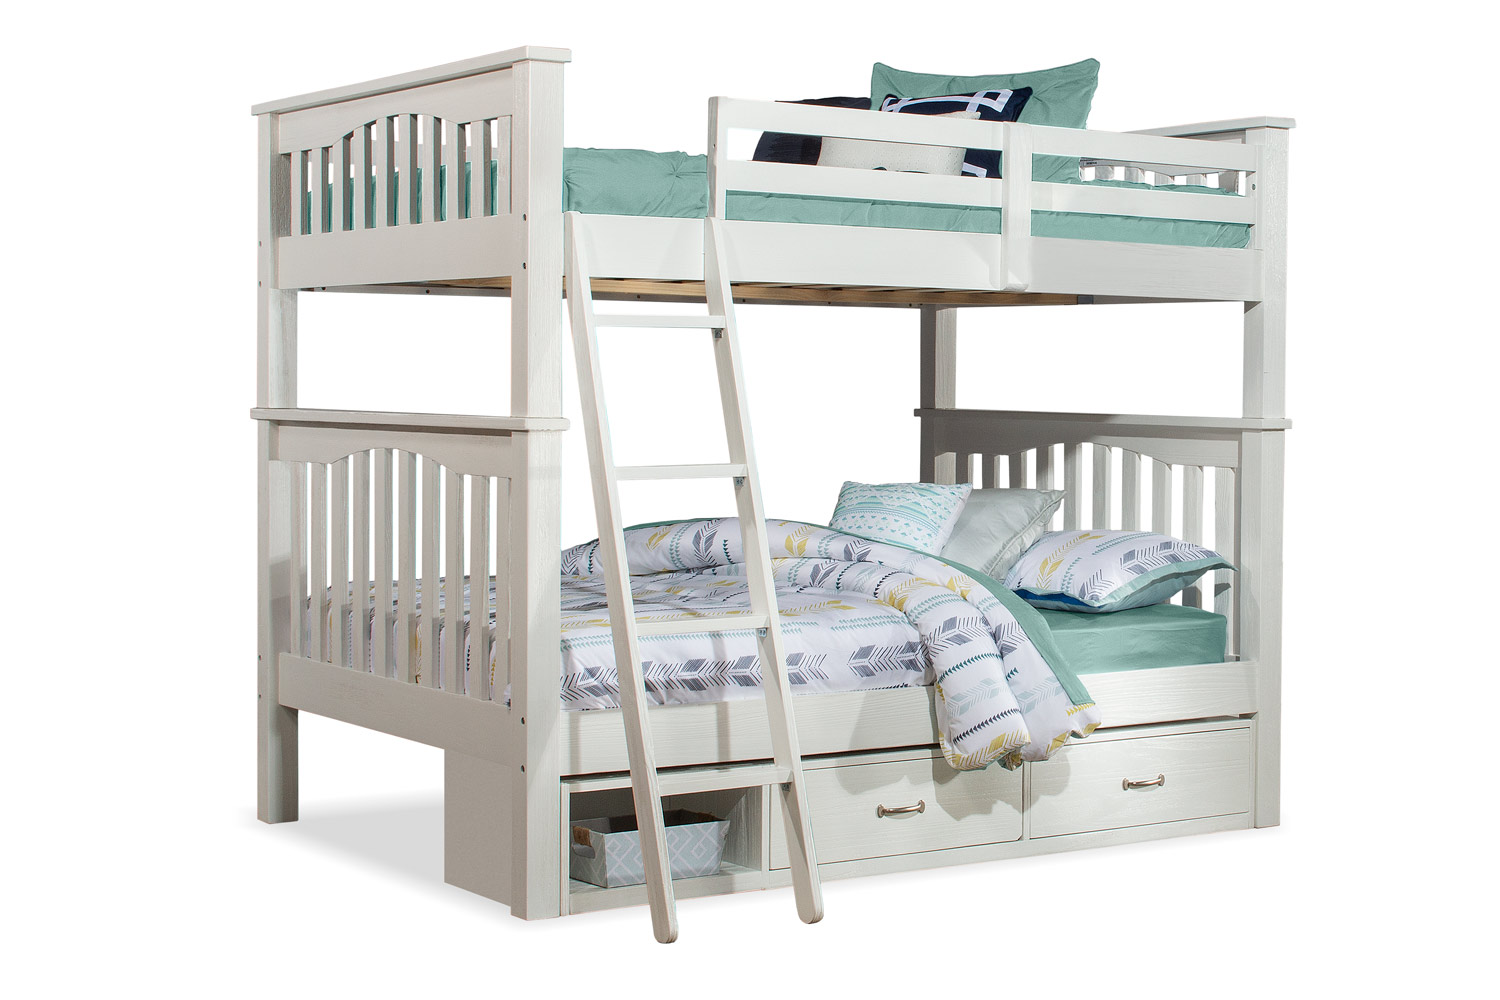 NE Kids Highlands Harper Full/Full Bunk Bed with Storage Unit - White Finish